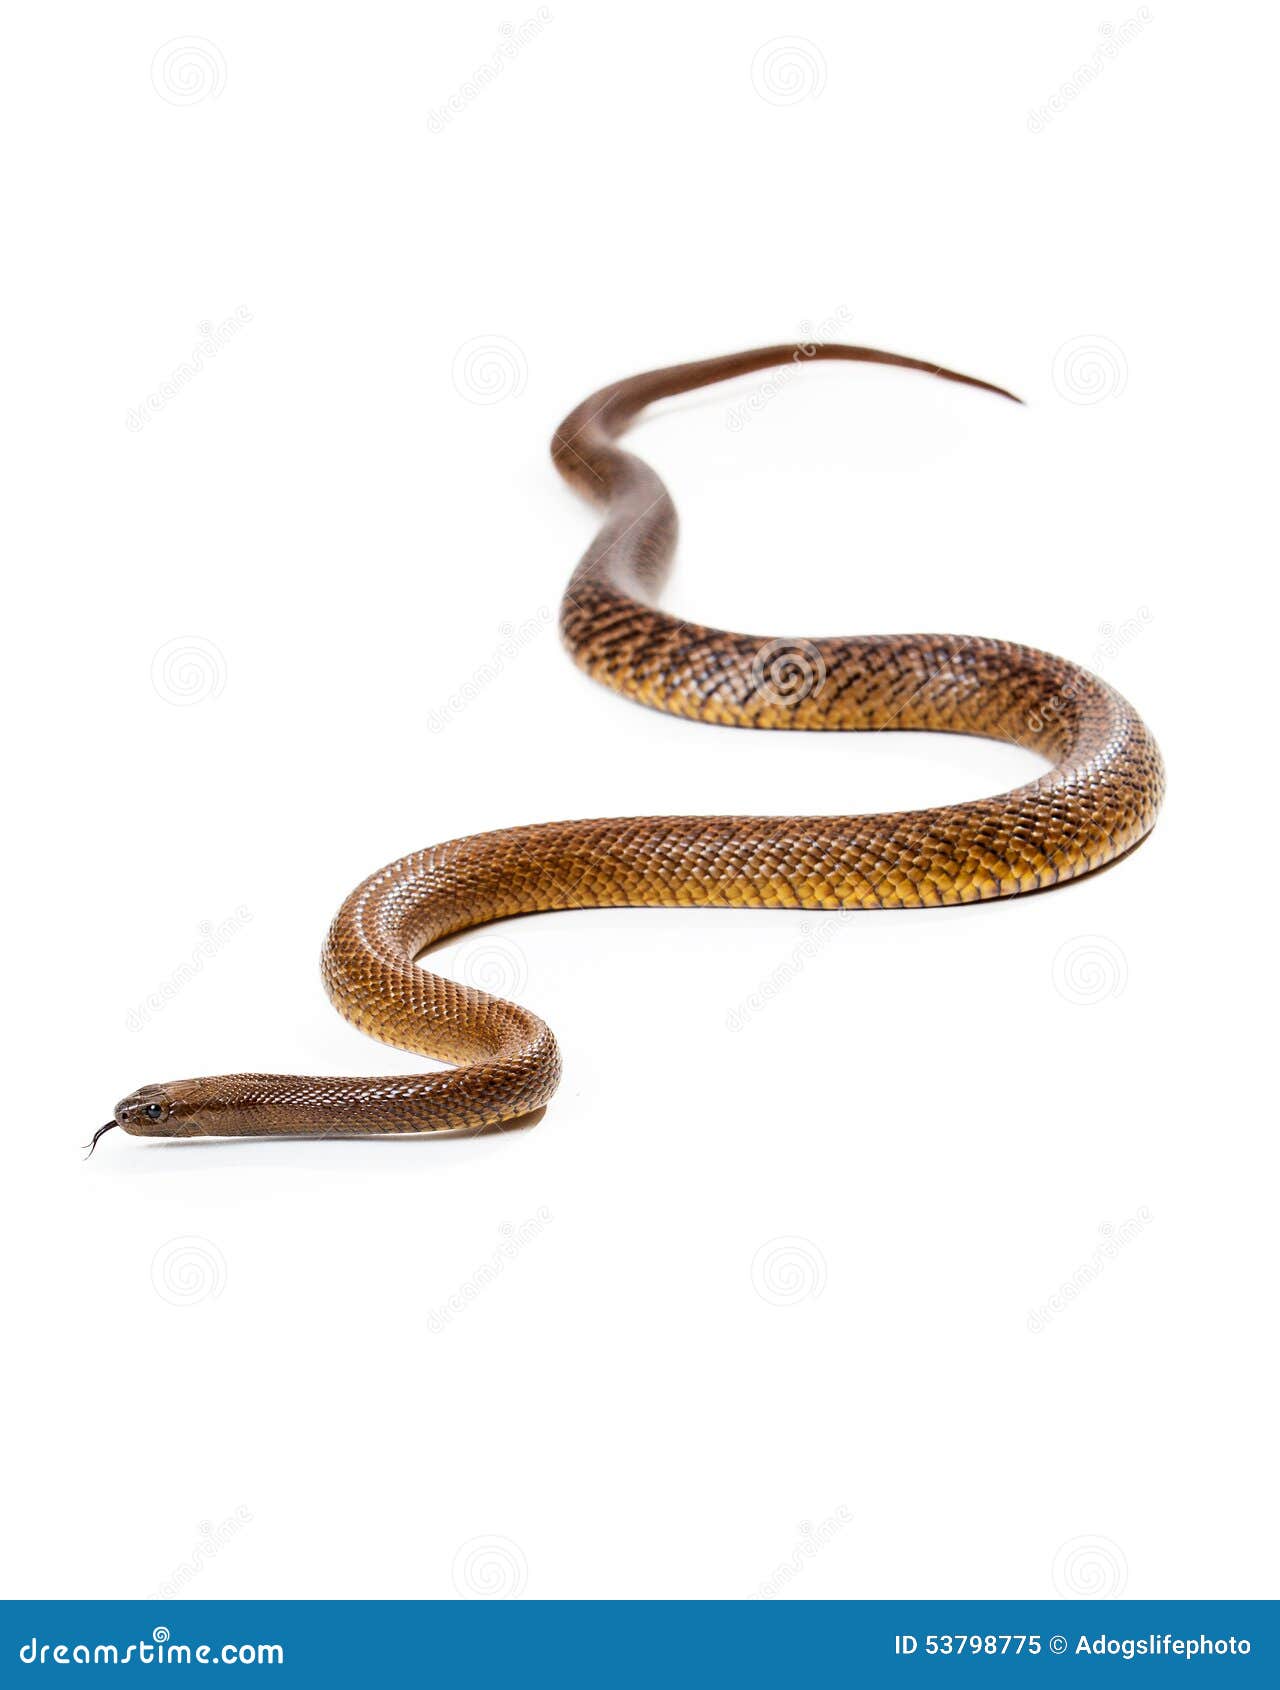 dangerous venomous inland taipan snake